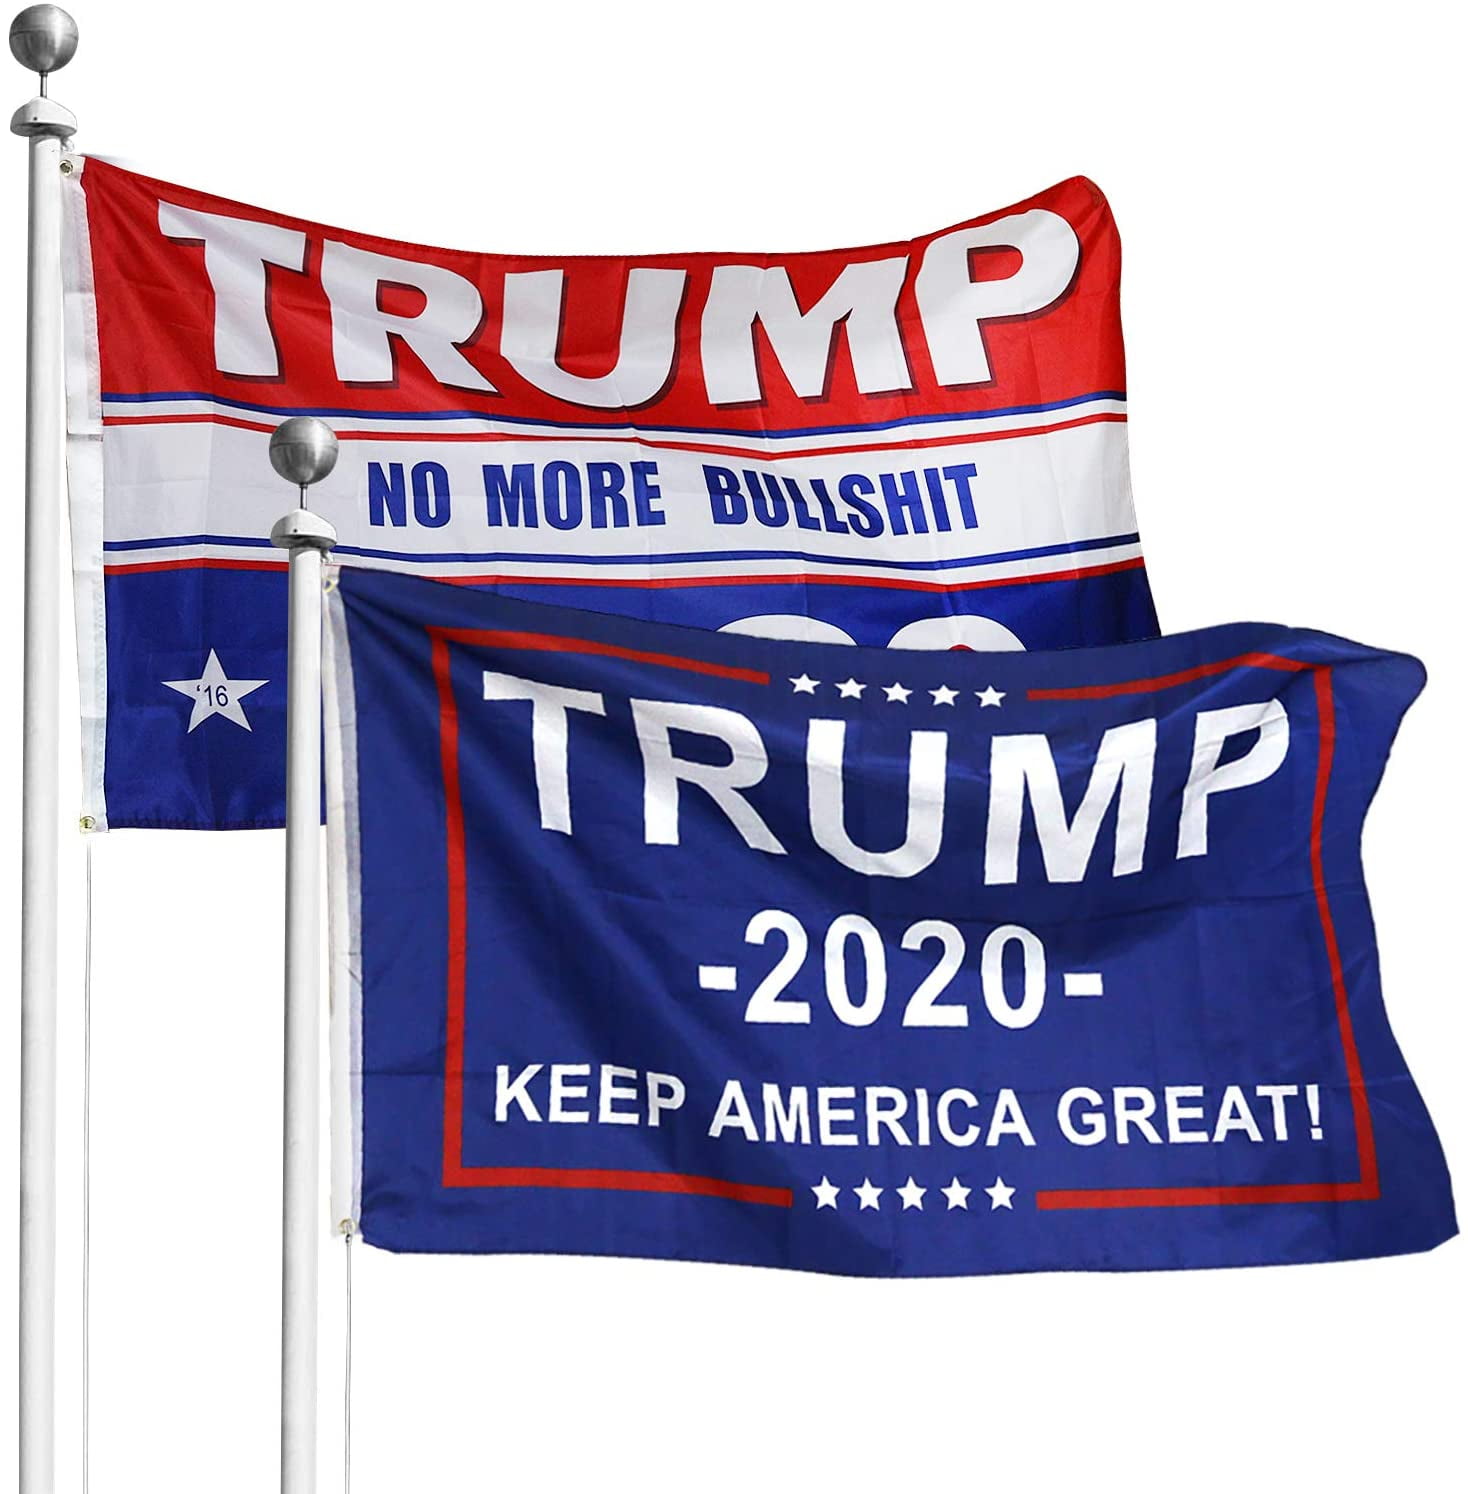 Donald Trump President Make America Great Again MAGA Thumbs Up 3x5 Feet USA Flag